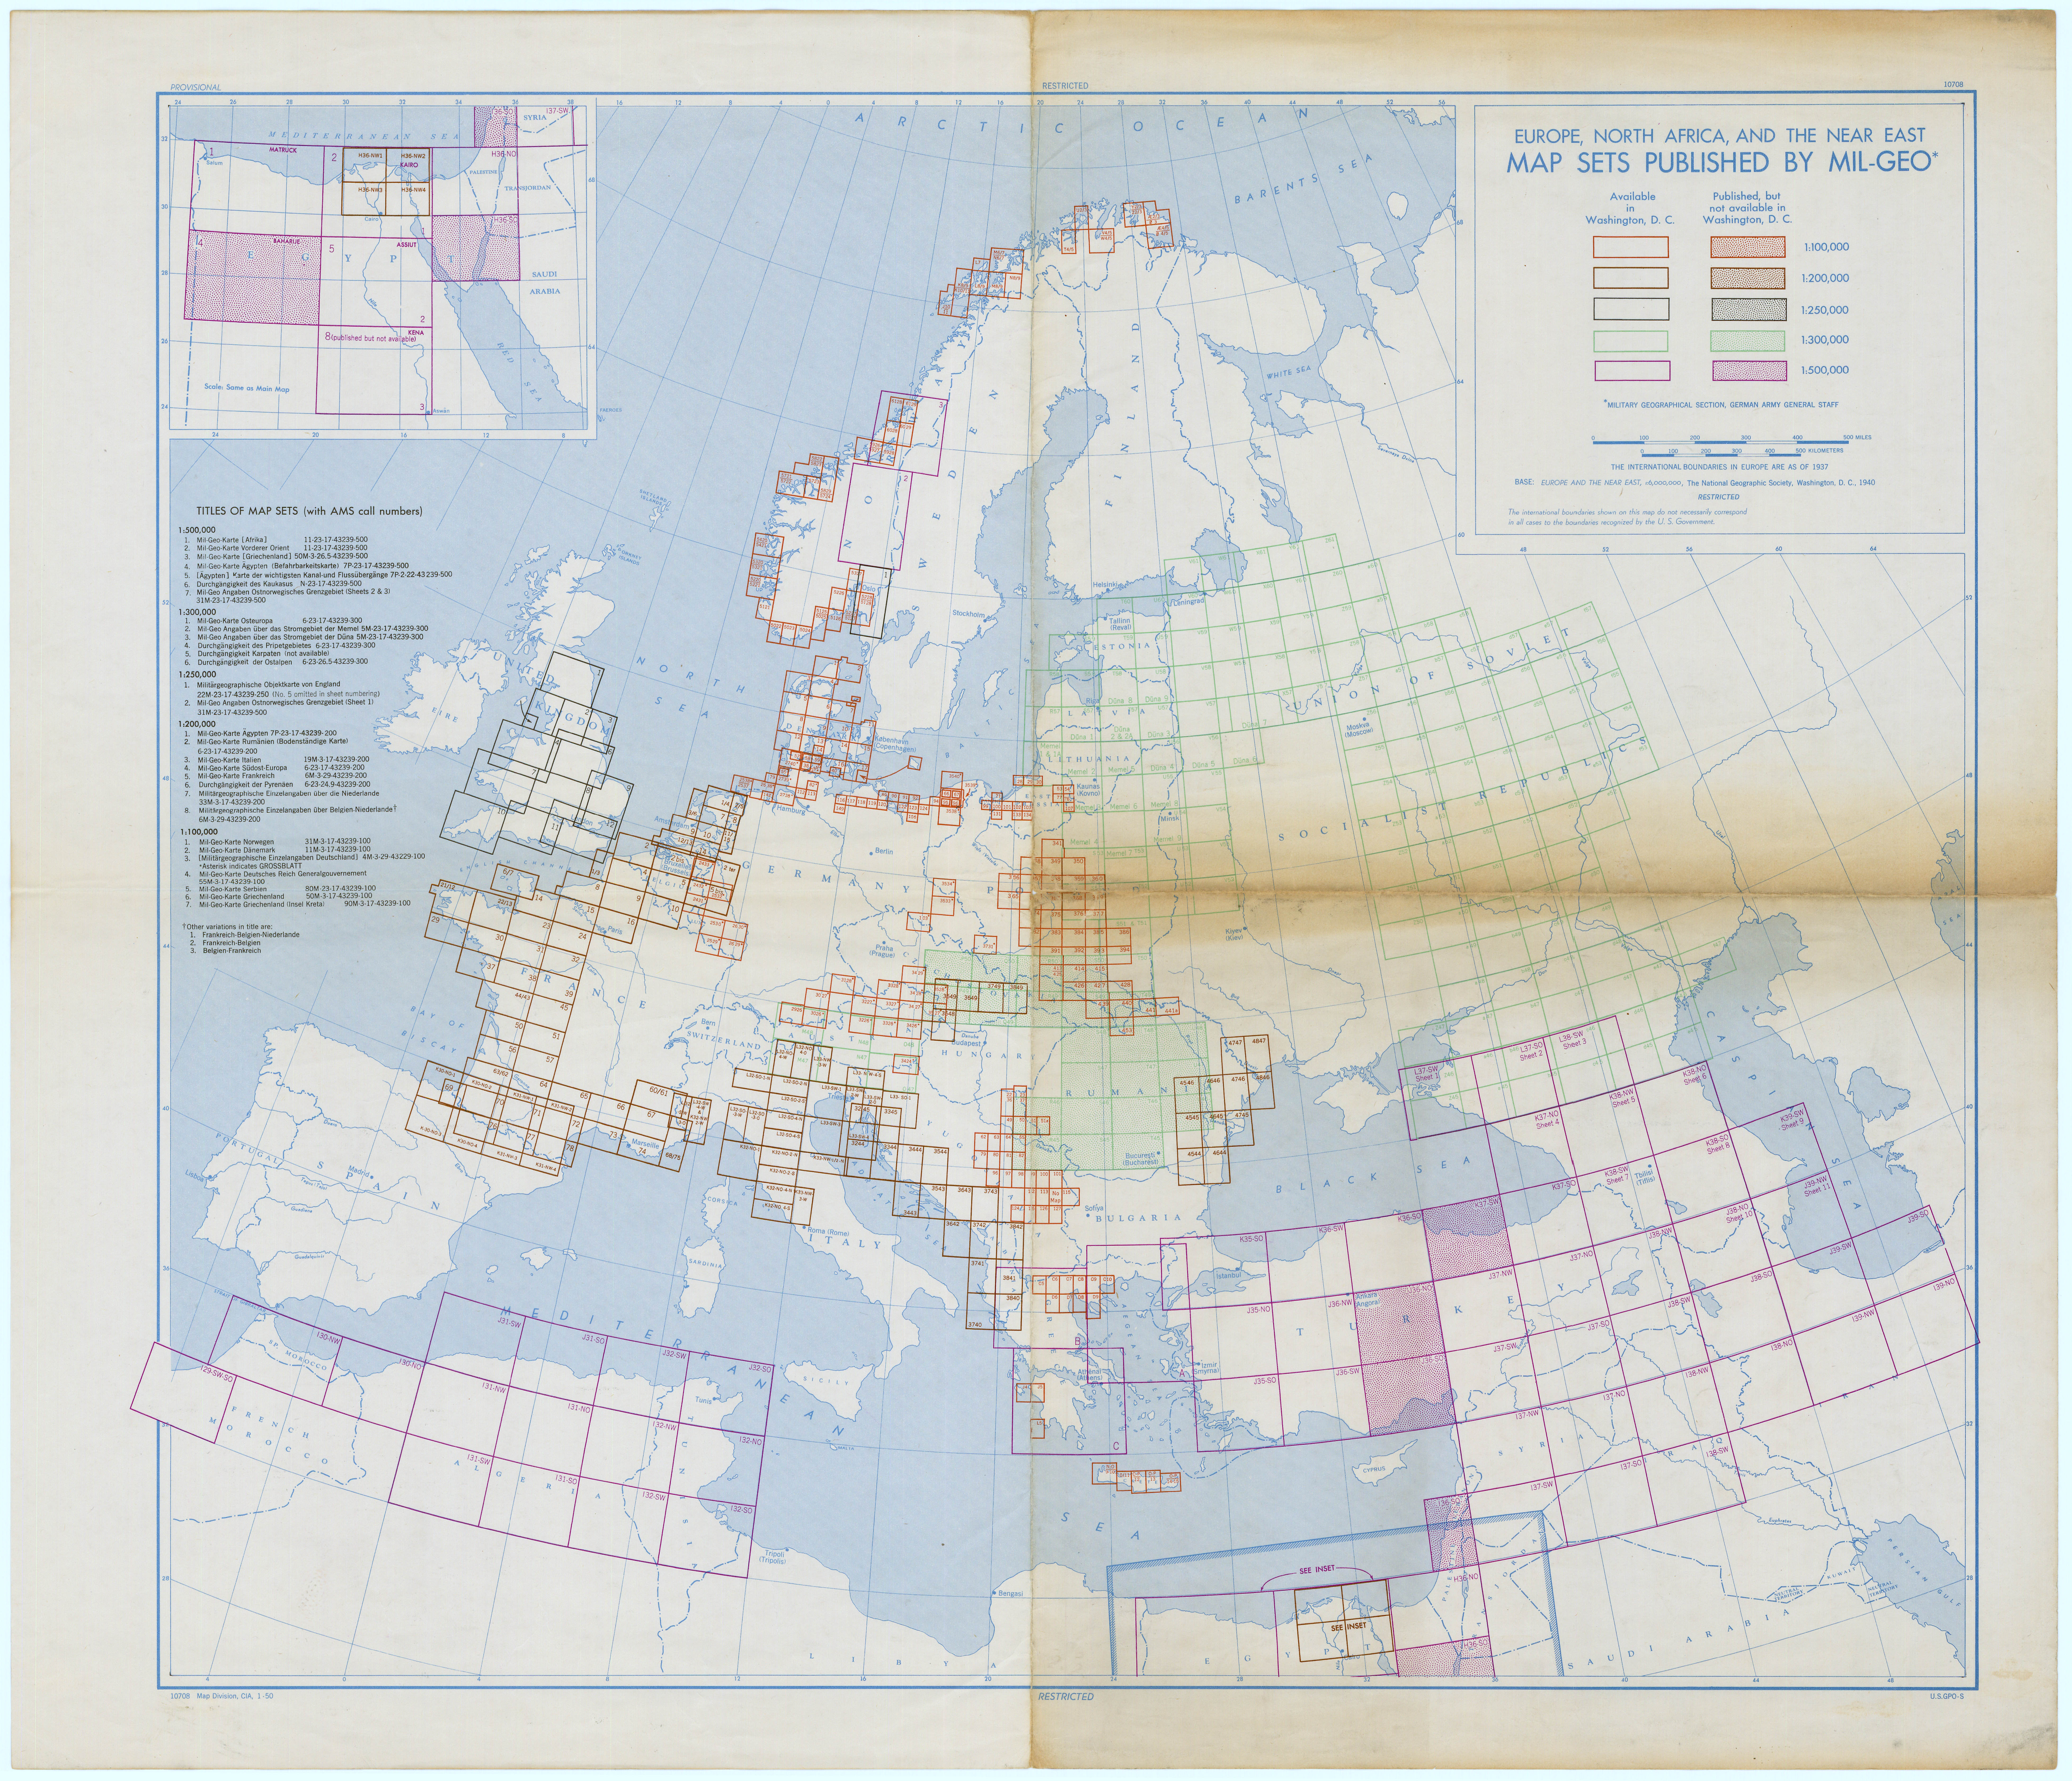  INDEKSY - MAP_SETS_PUBLISHED_BY_MIL-GEO_1950.jpg